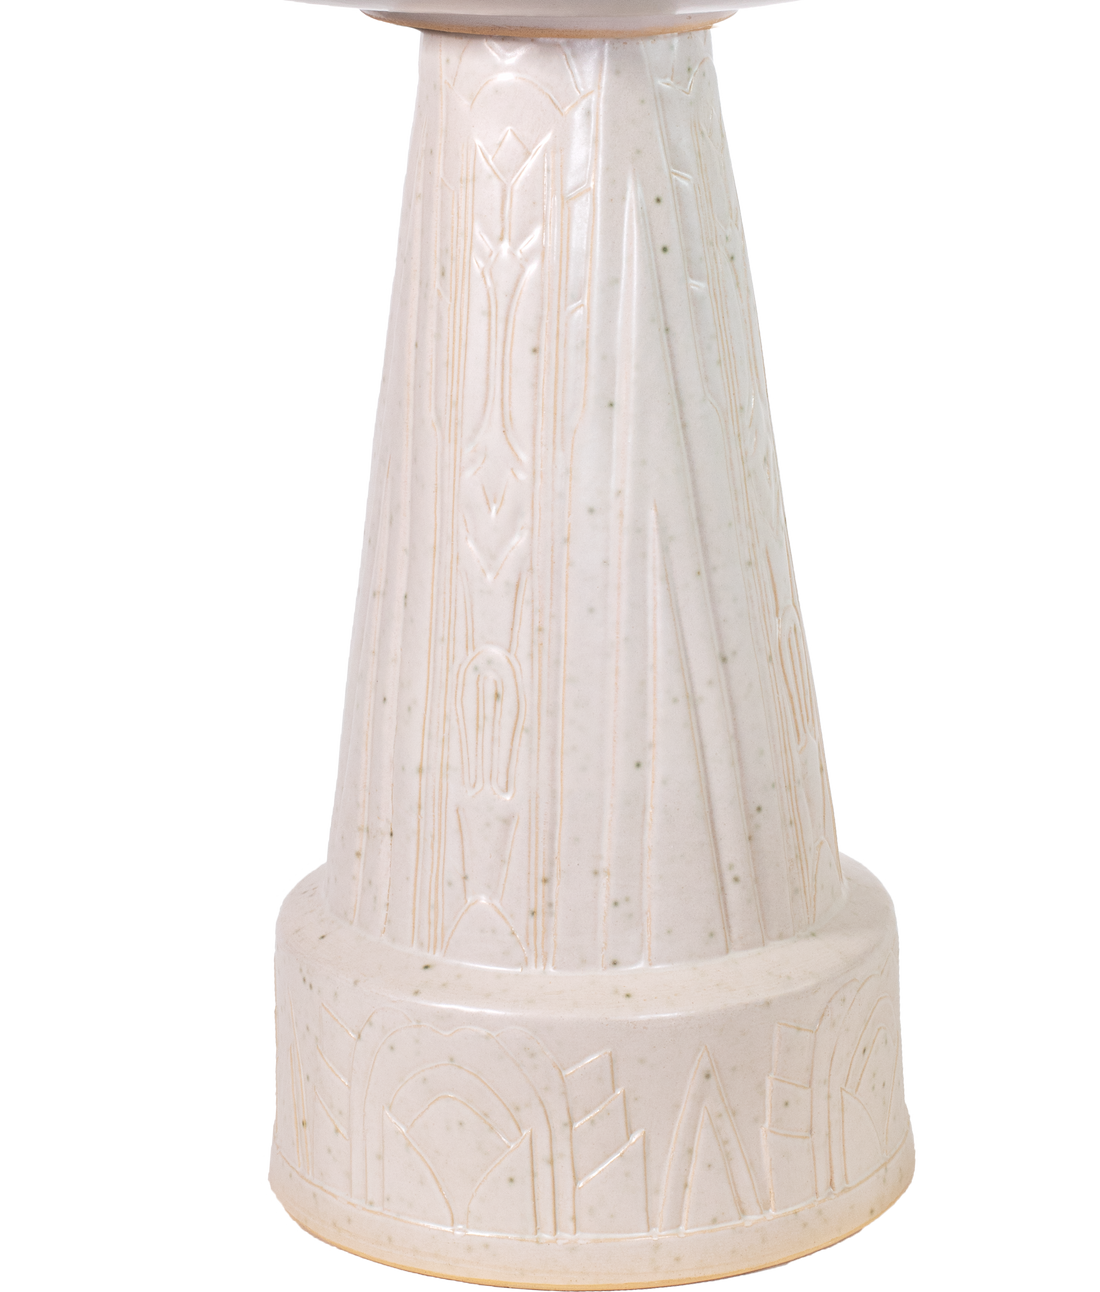 ceramic white birdbath pedestal with deco style design